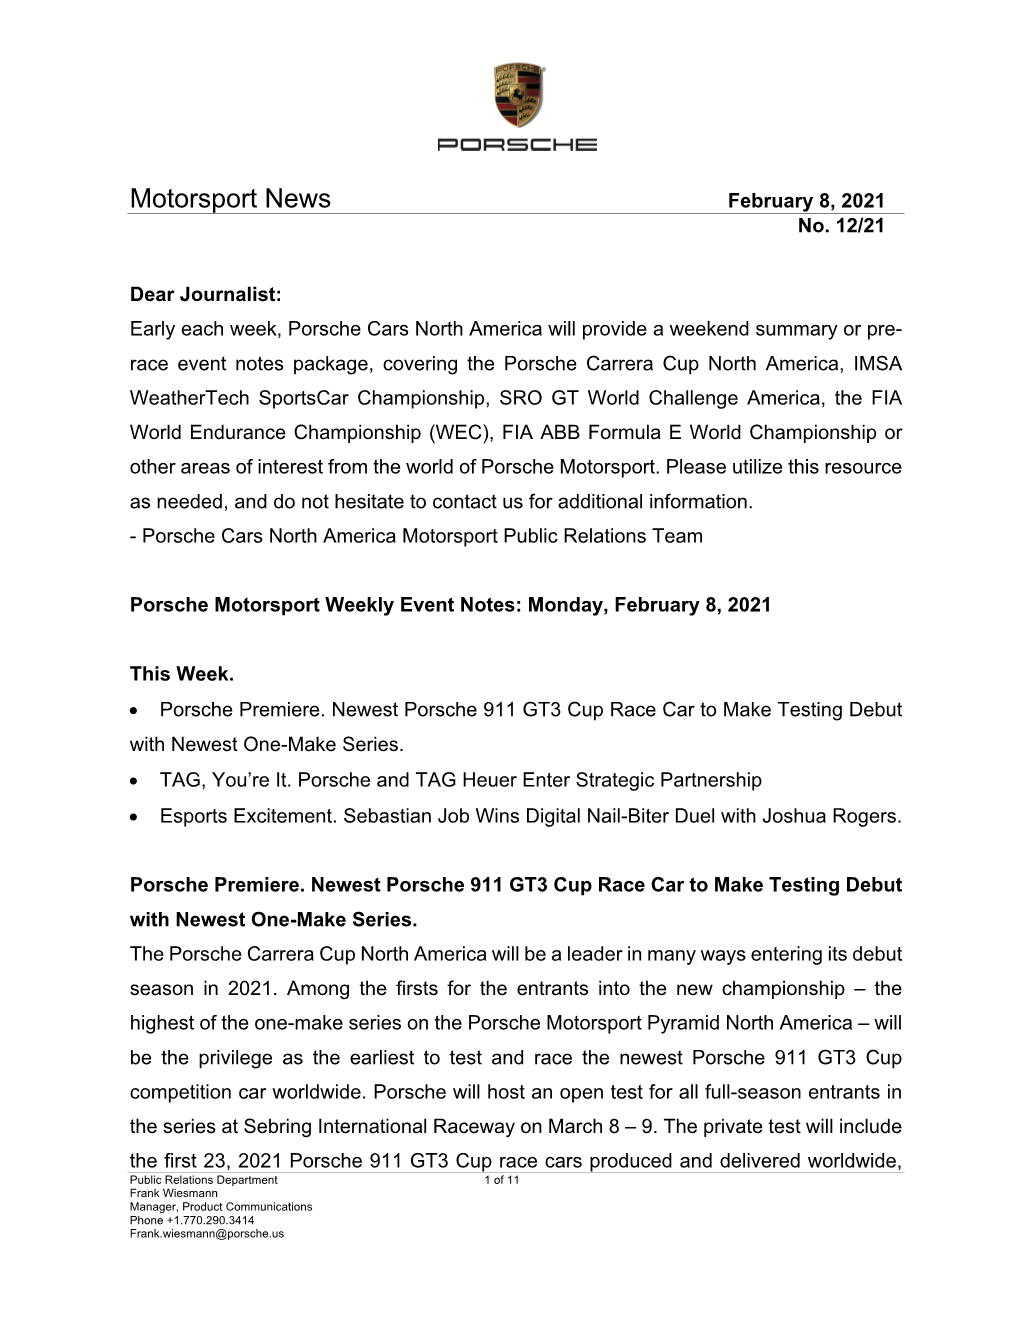 Motorsport News February 8, 2021 No